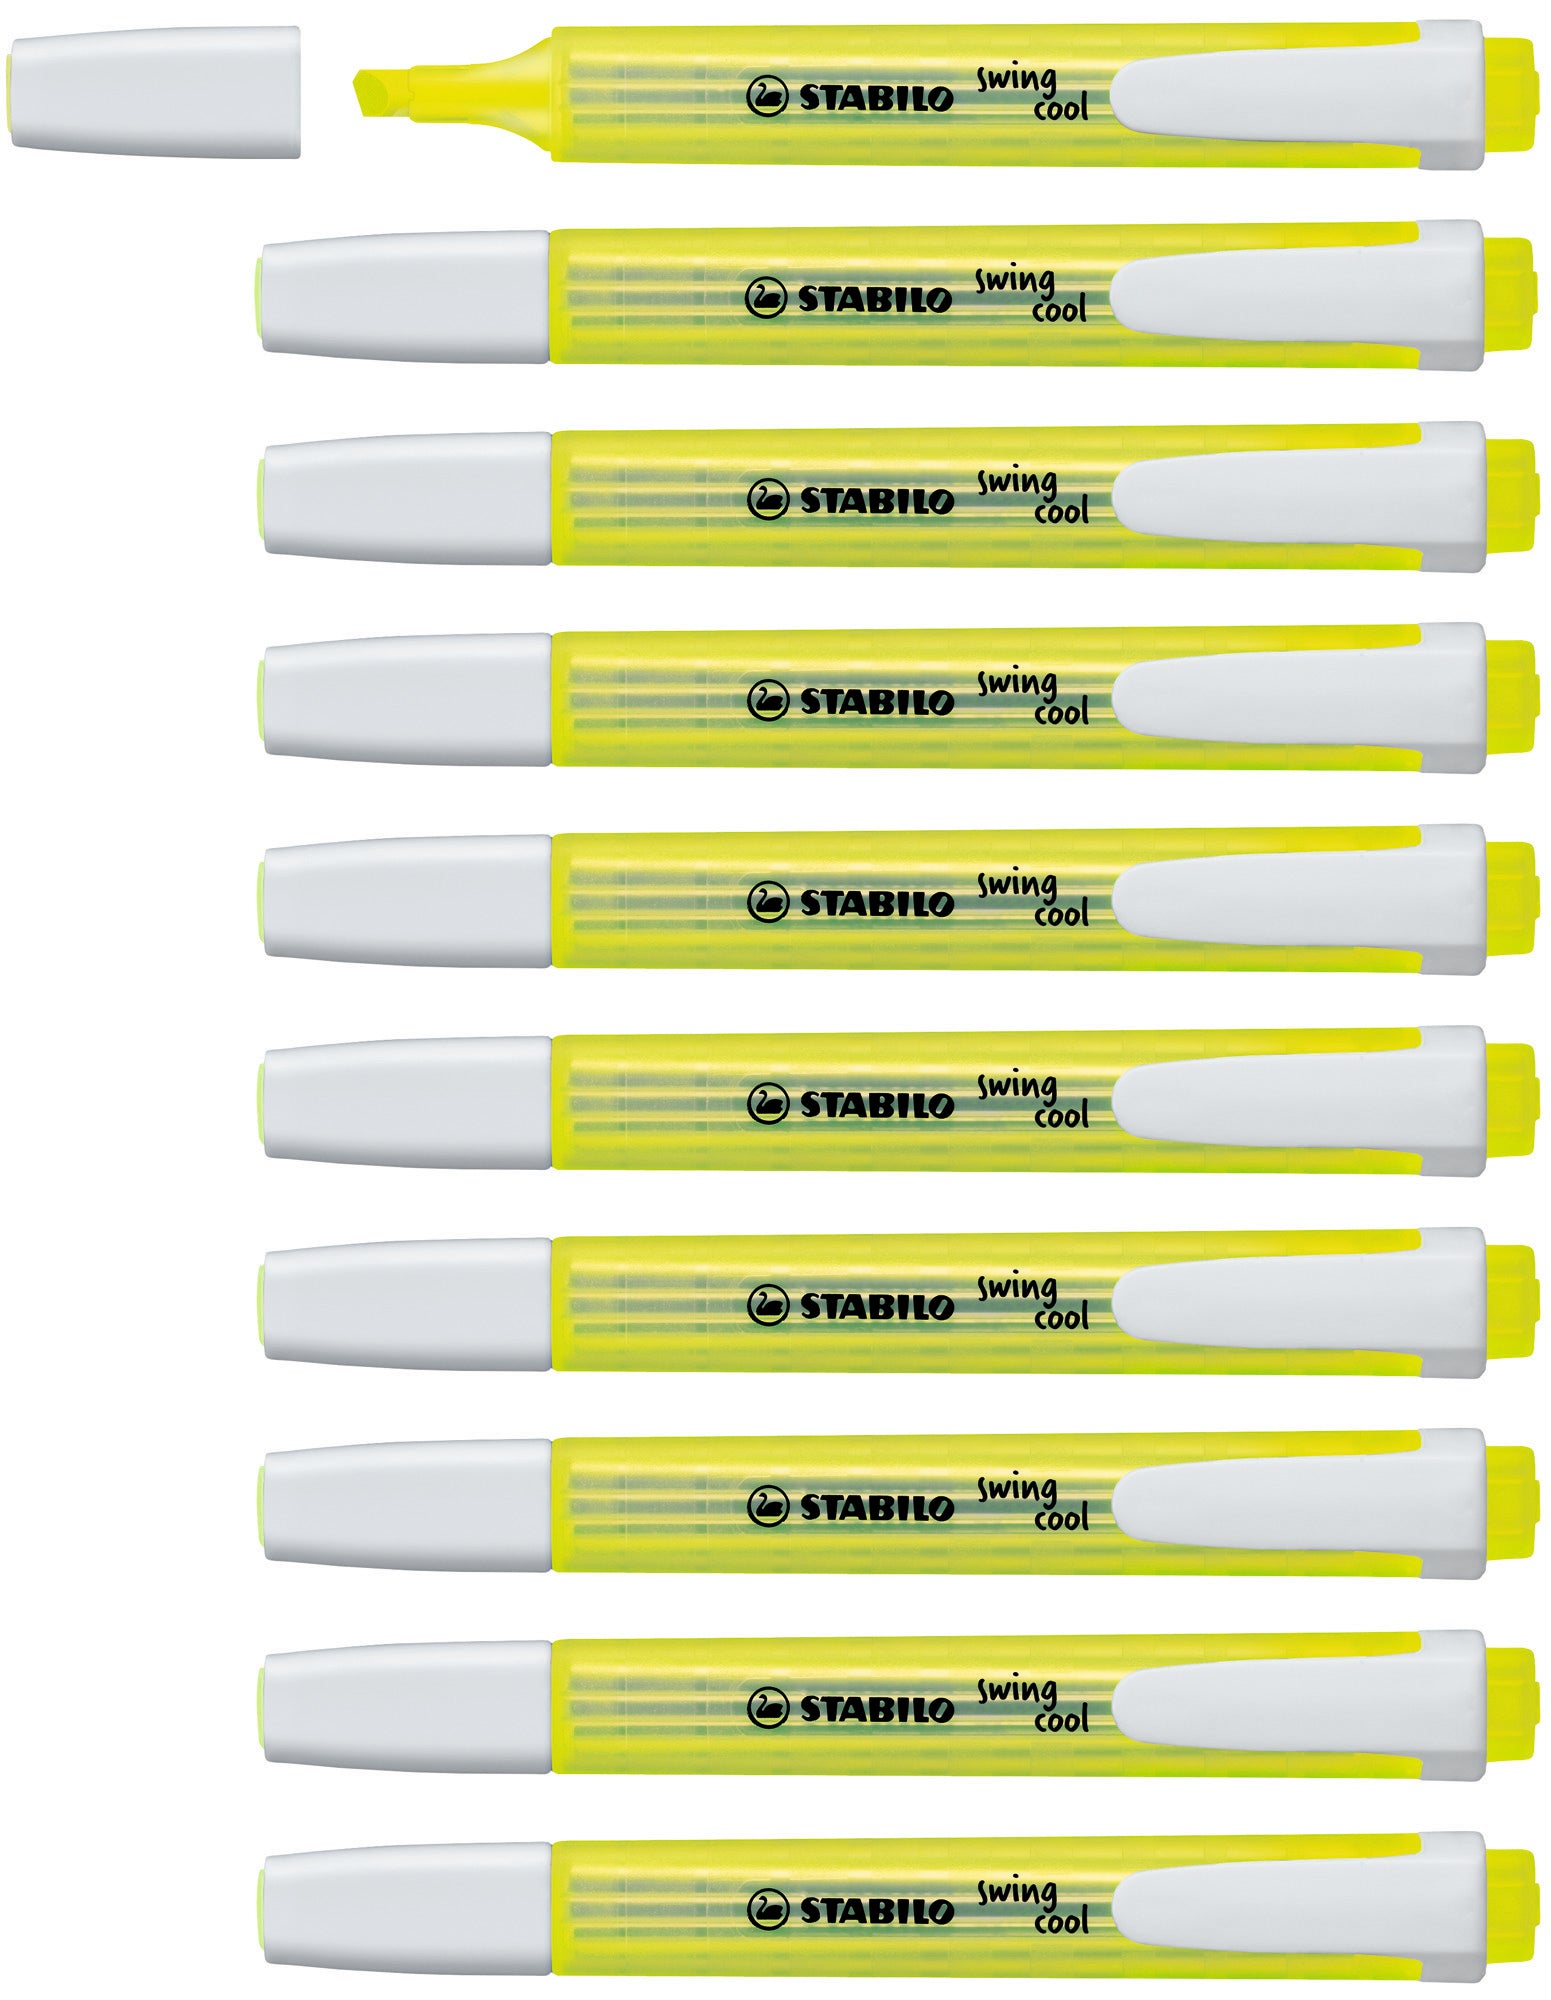 STABILO Swing Cool highlighter box of 10pcs Yellow - _MS, ECTL-AUG23, ECTL-HOTBUY60, HIGHLIGHTER, STABILO